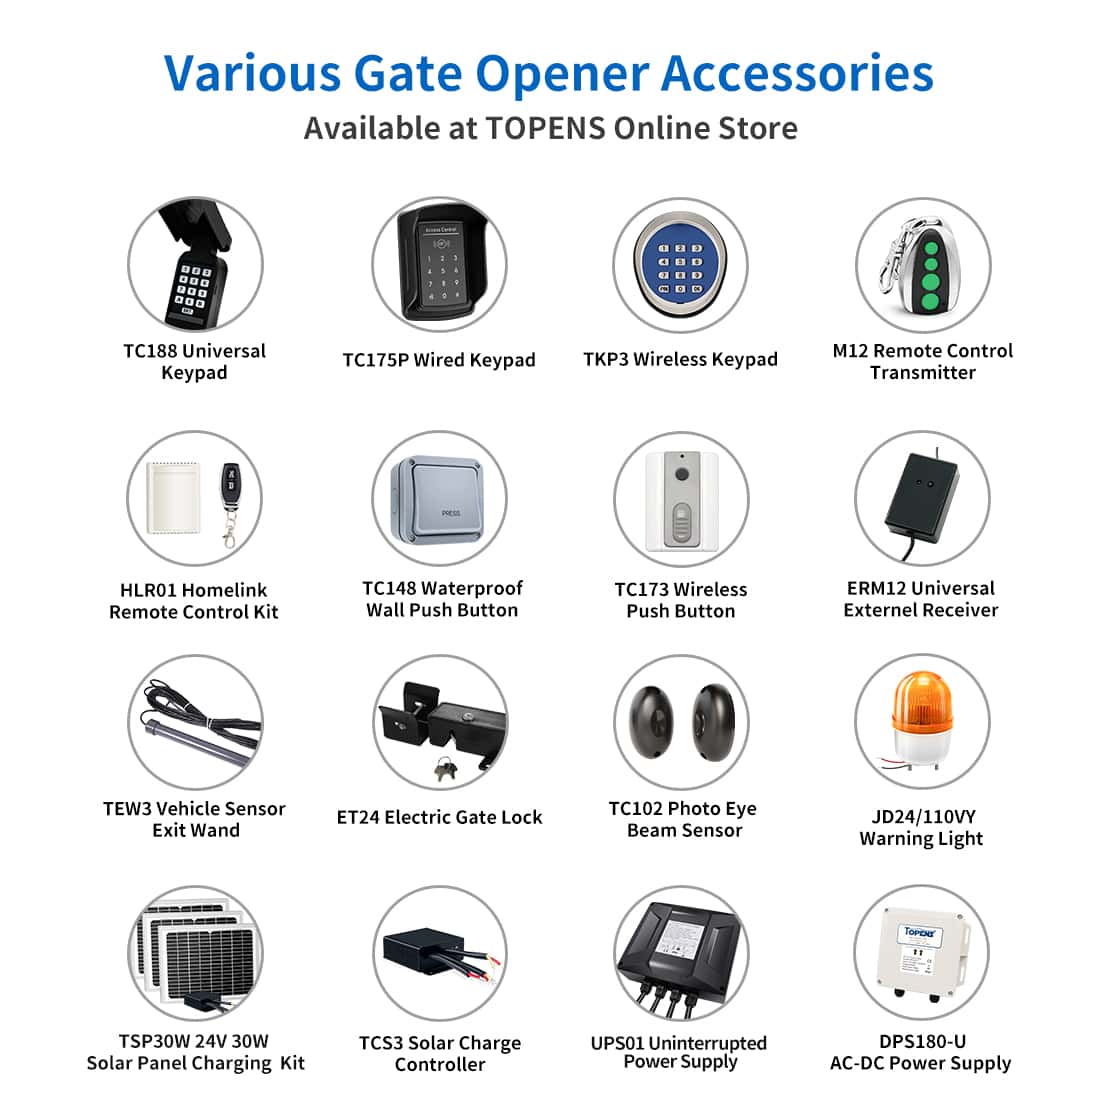 TOPENS Online Gate Opener Accessories